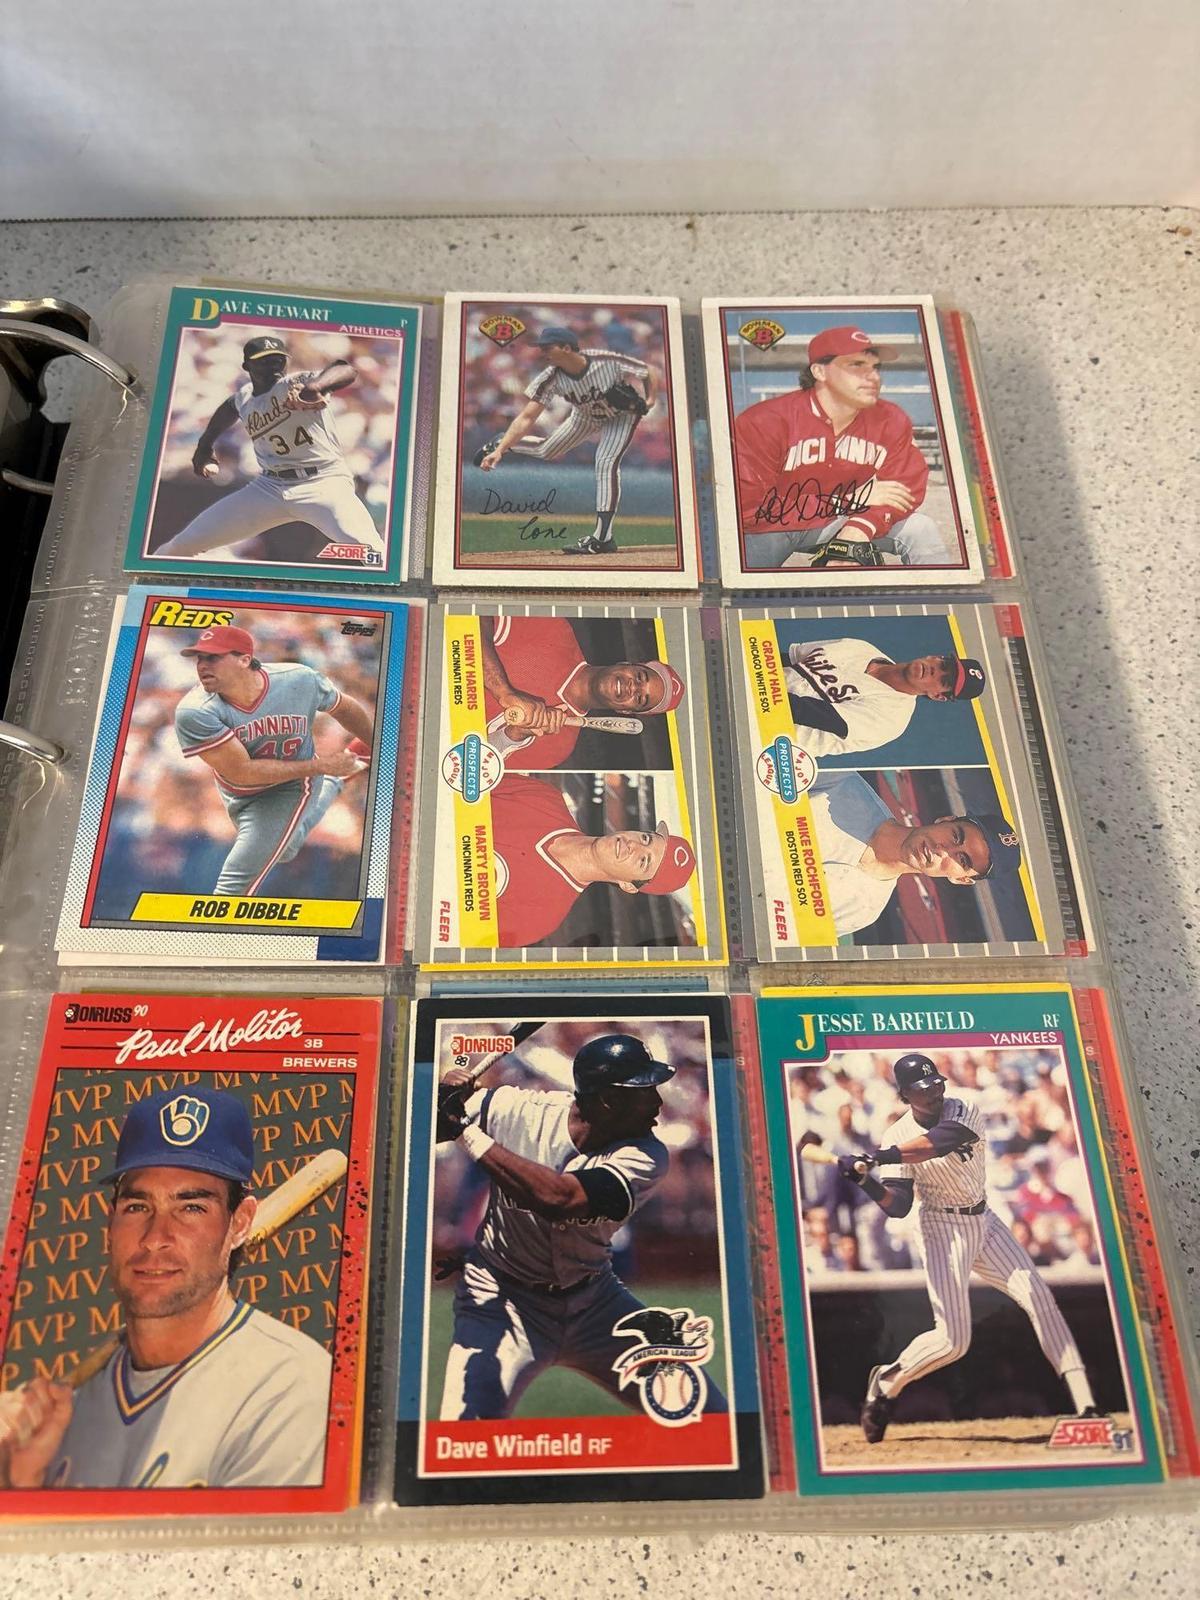 three ring binder full of baseball cards